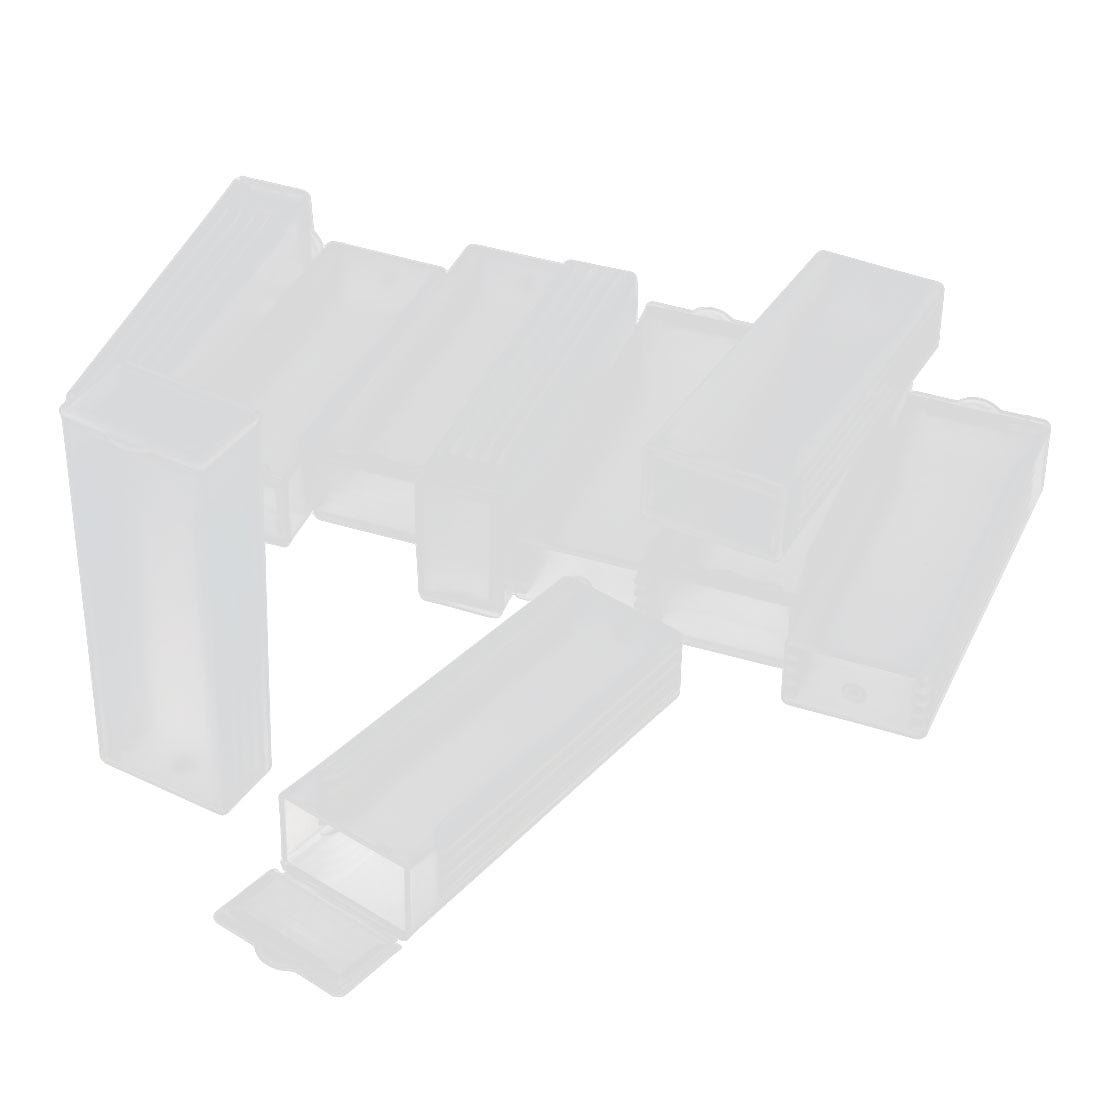 10pcs Microscope Slide Box Hold 5 standard microscope slides Plastic Clear White 